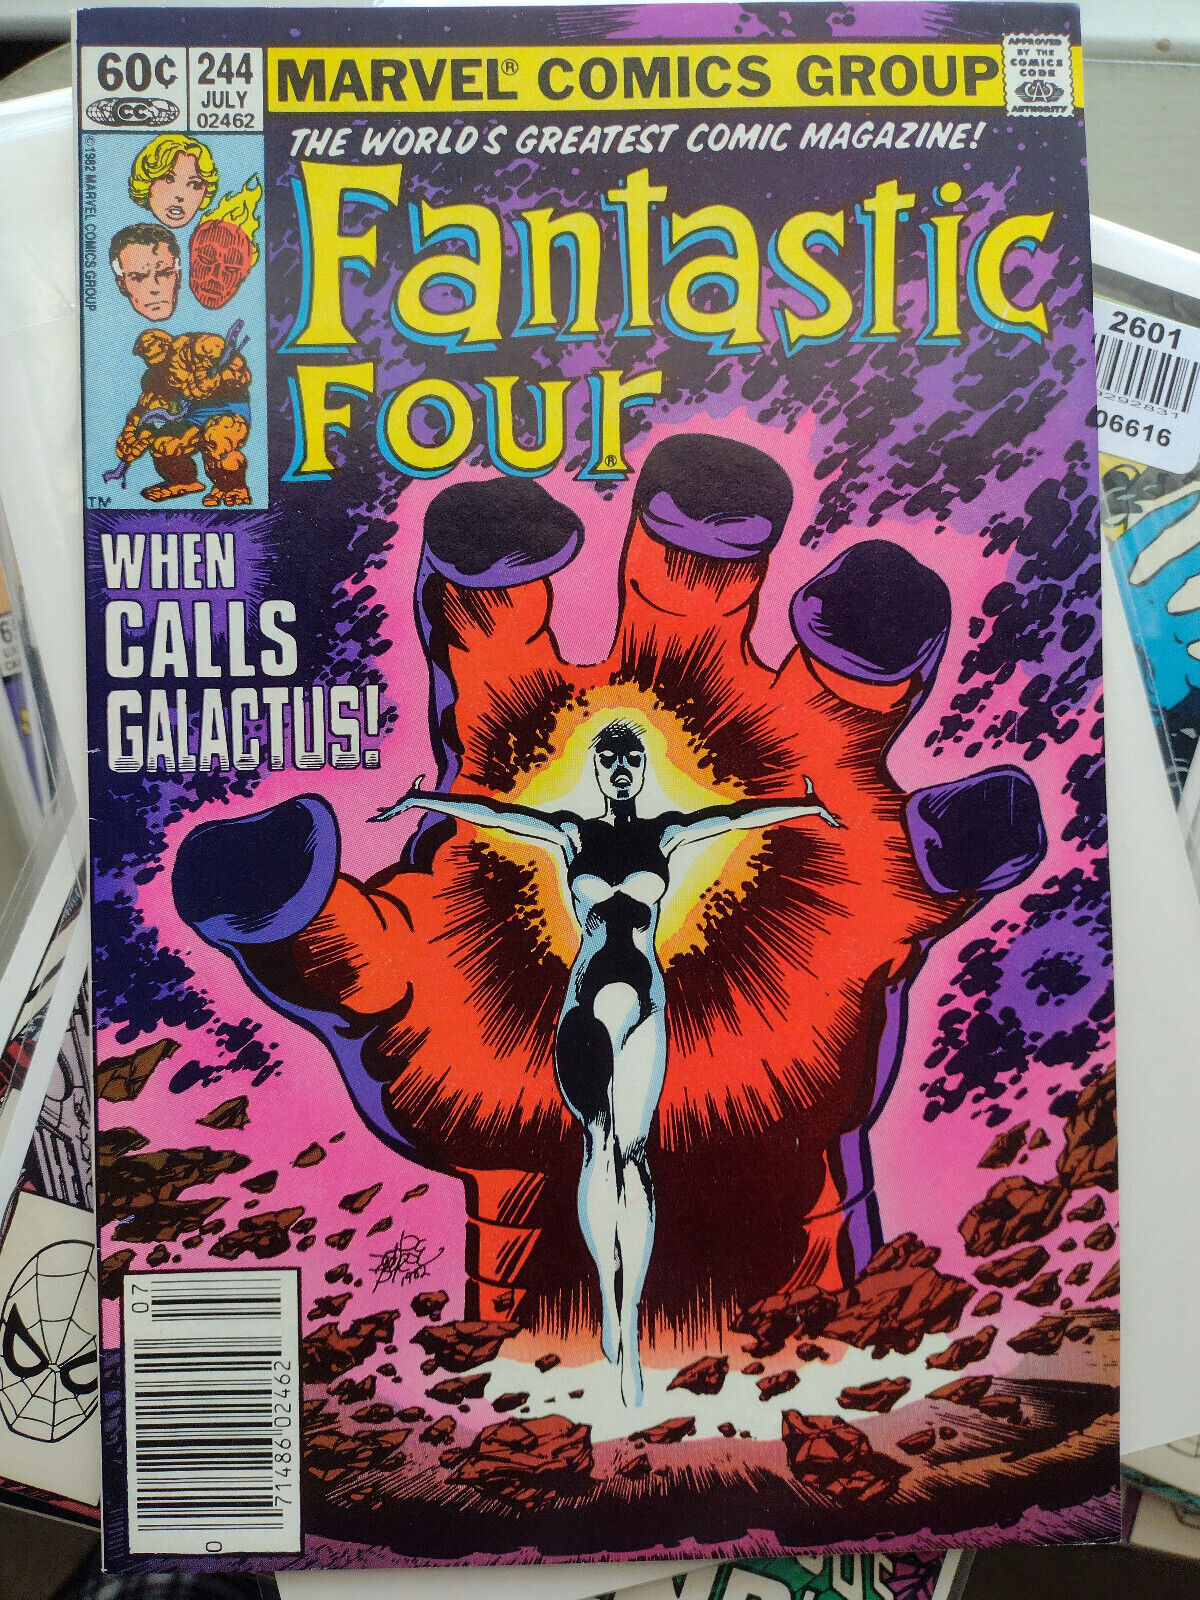 Fantastic Four #232-292 by John Byrne. FN/VF